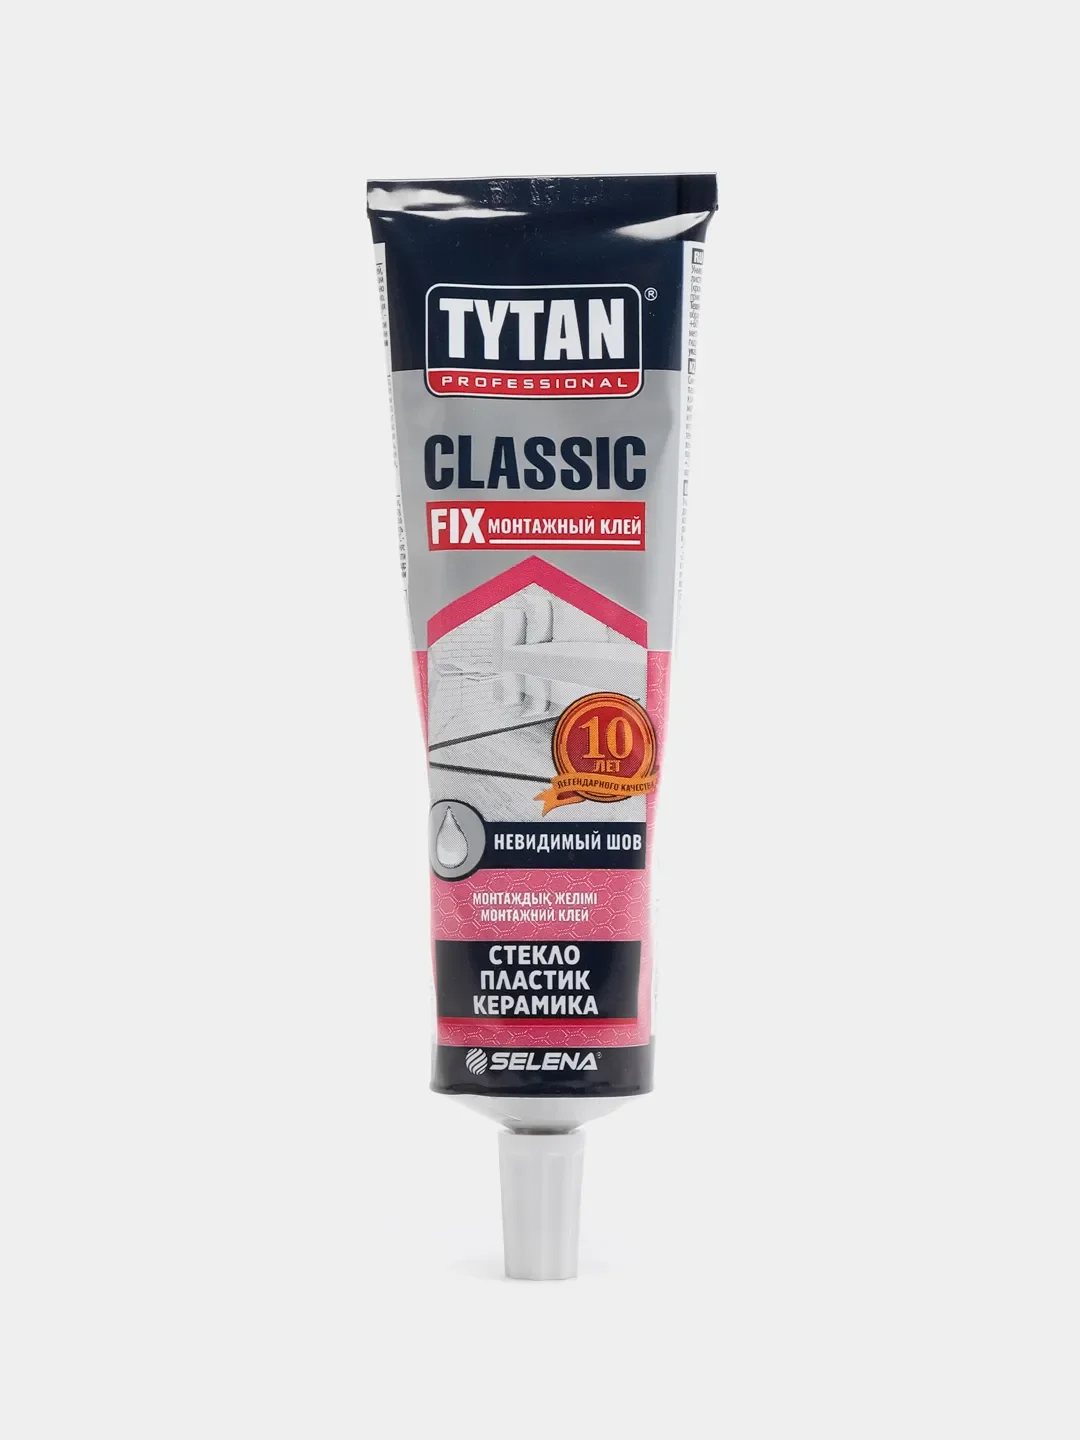 Tytan classic fix 310 мл